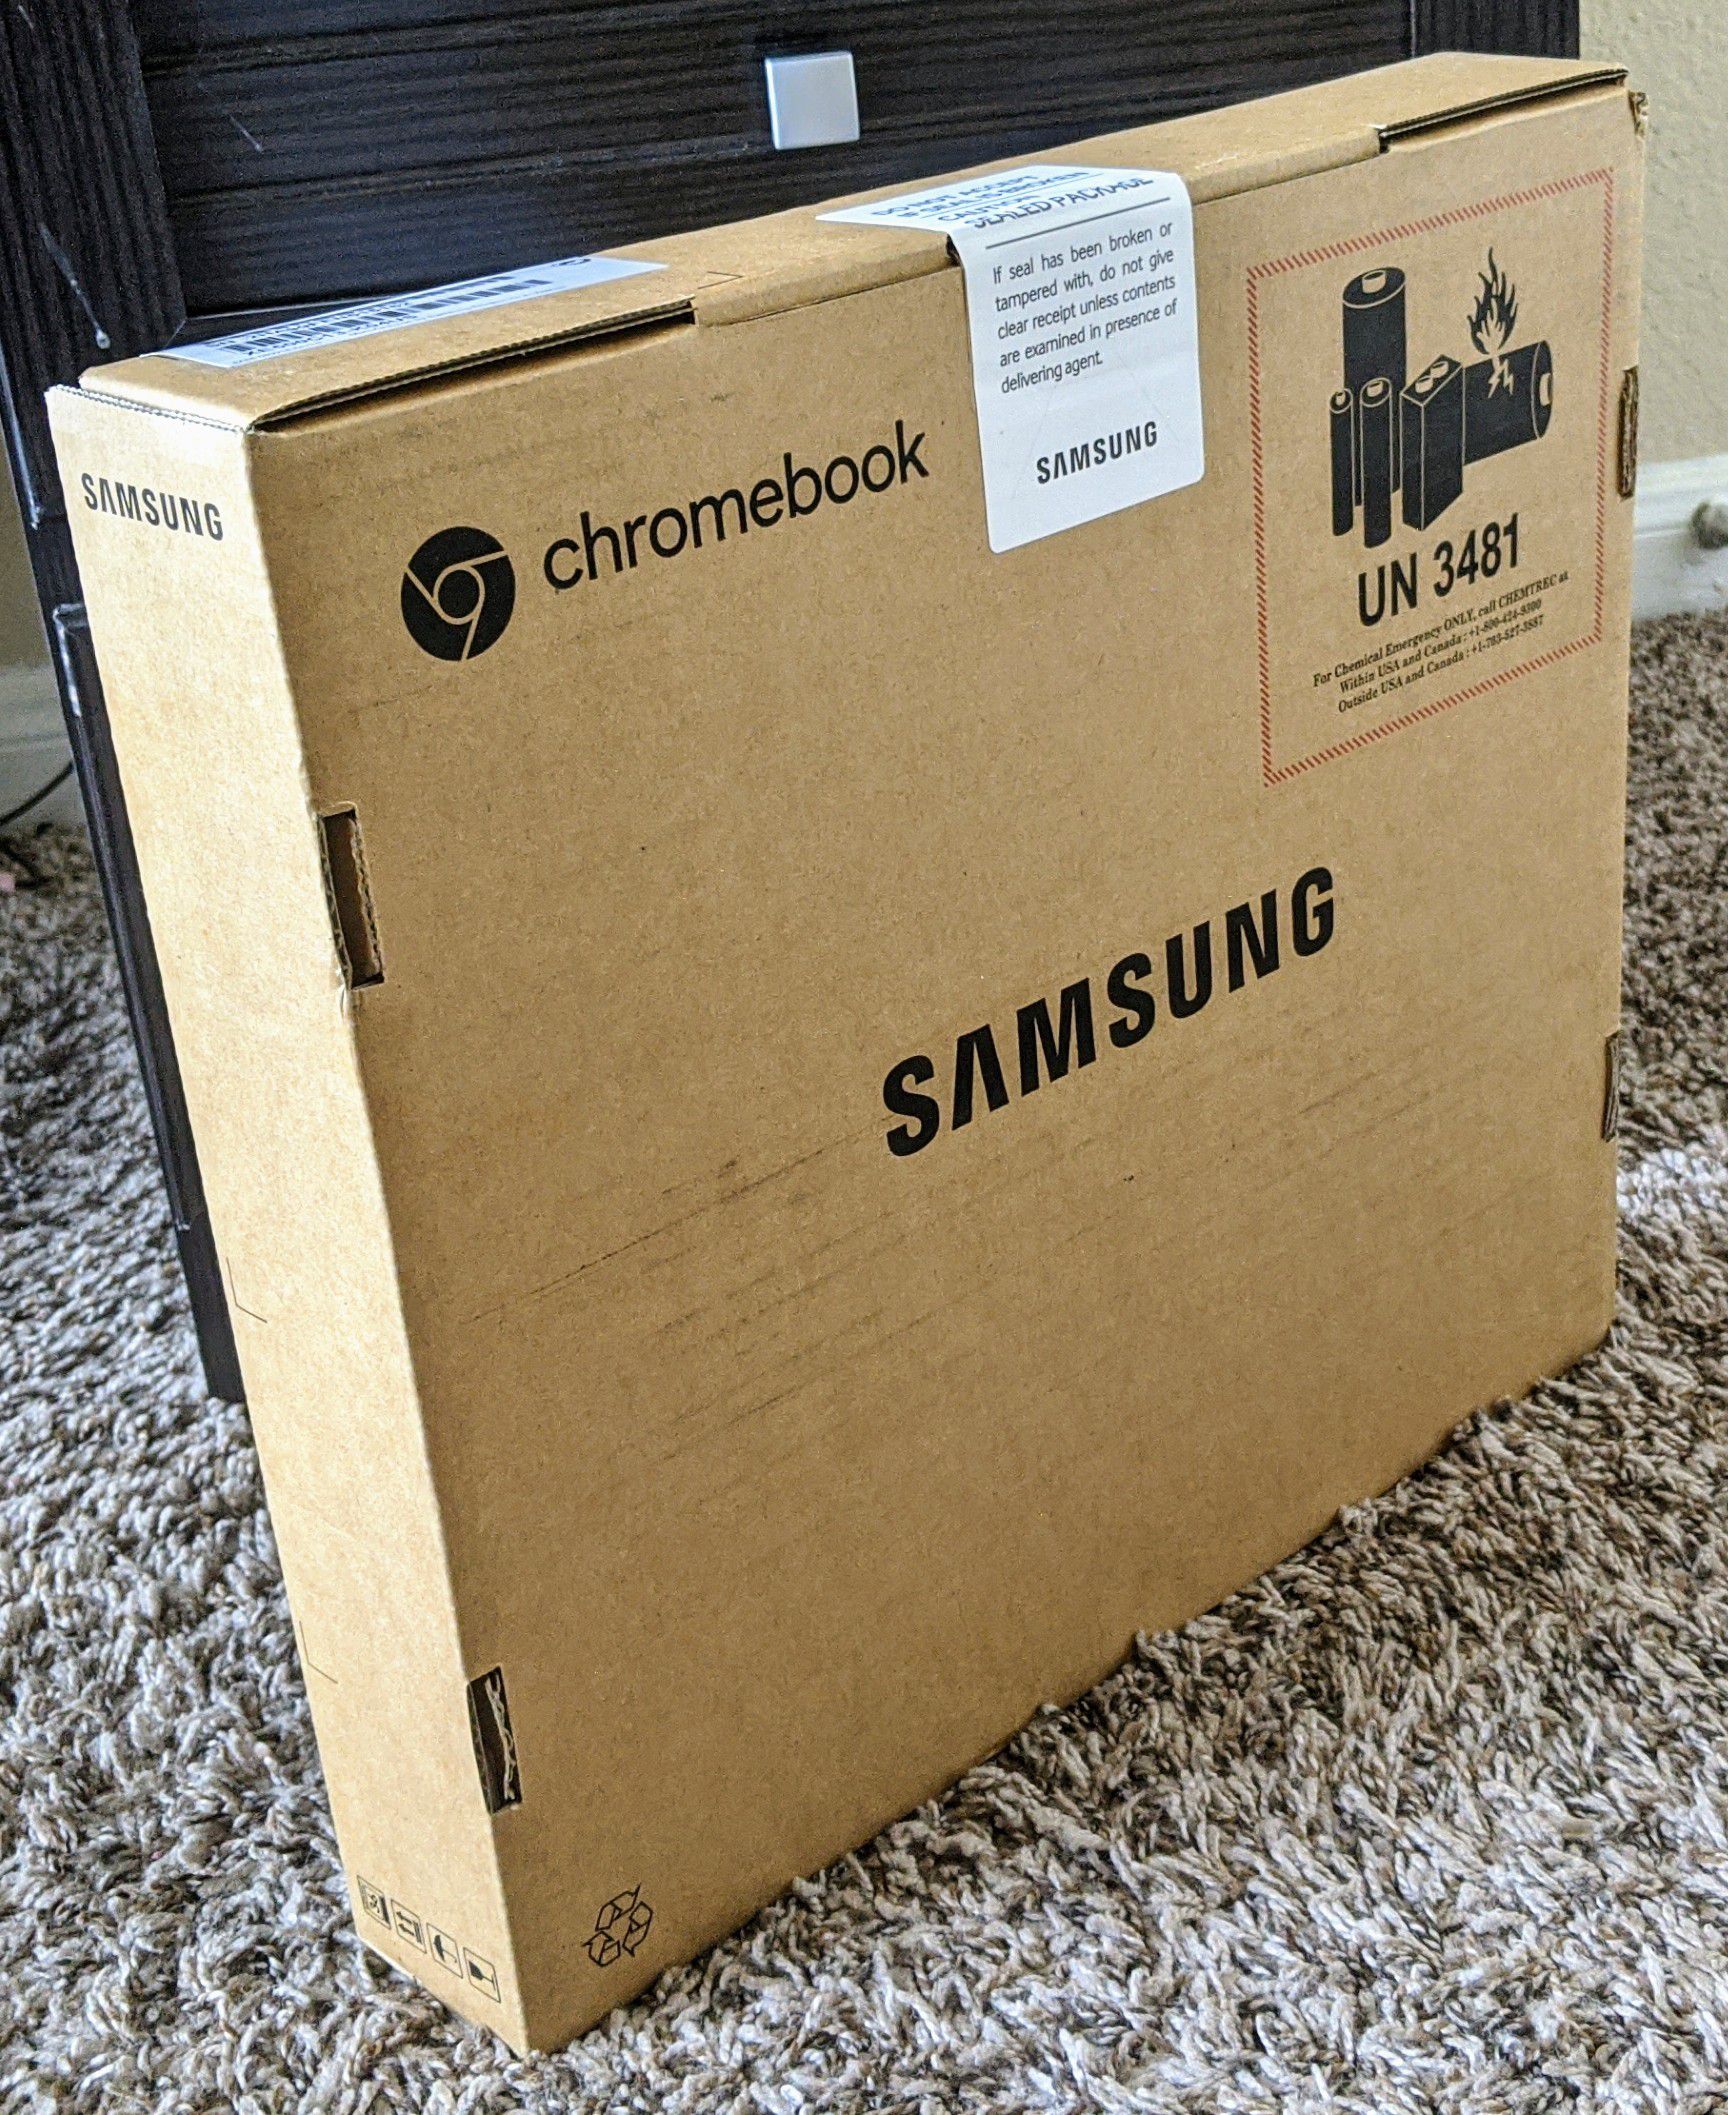 Brand New Samsung Chromebook - sealed box